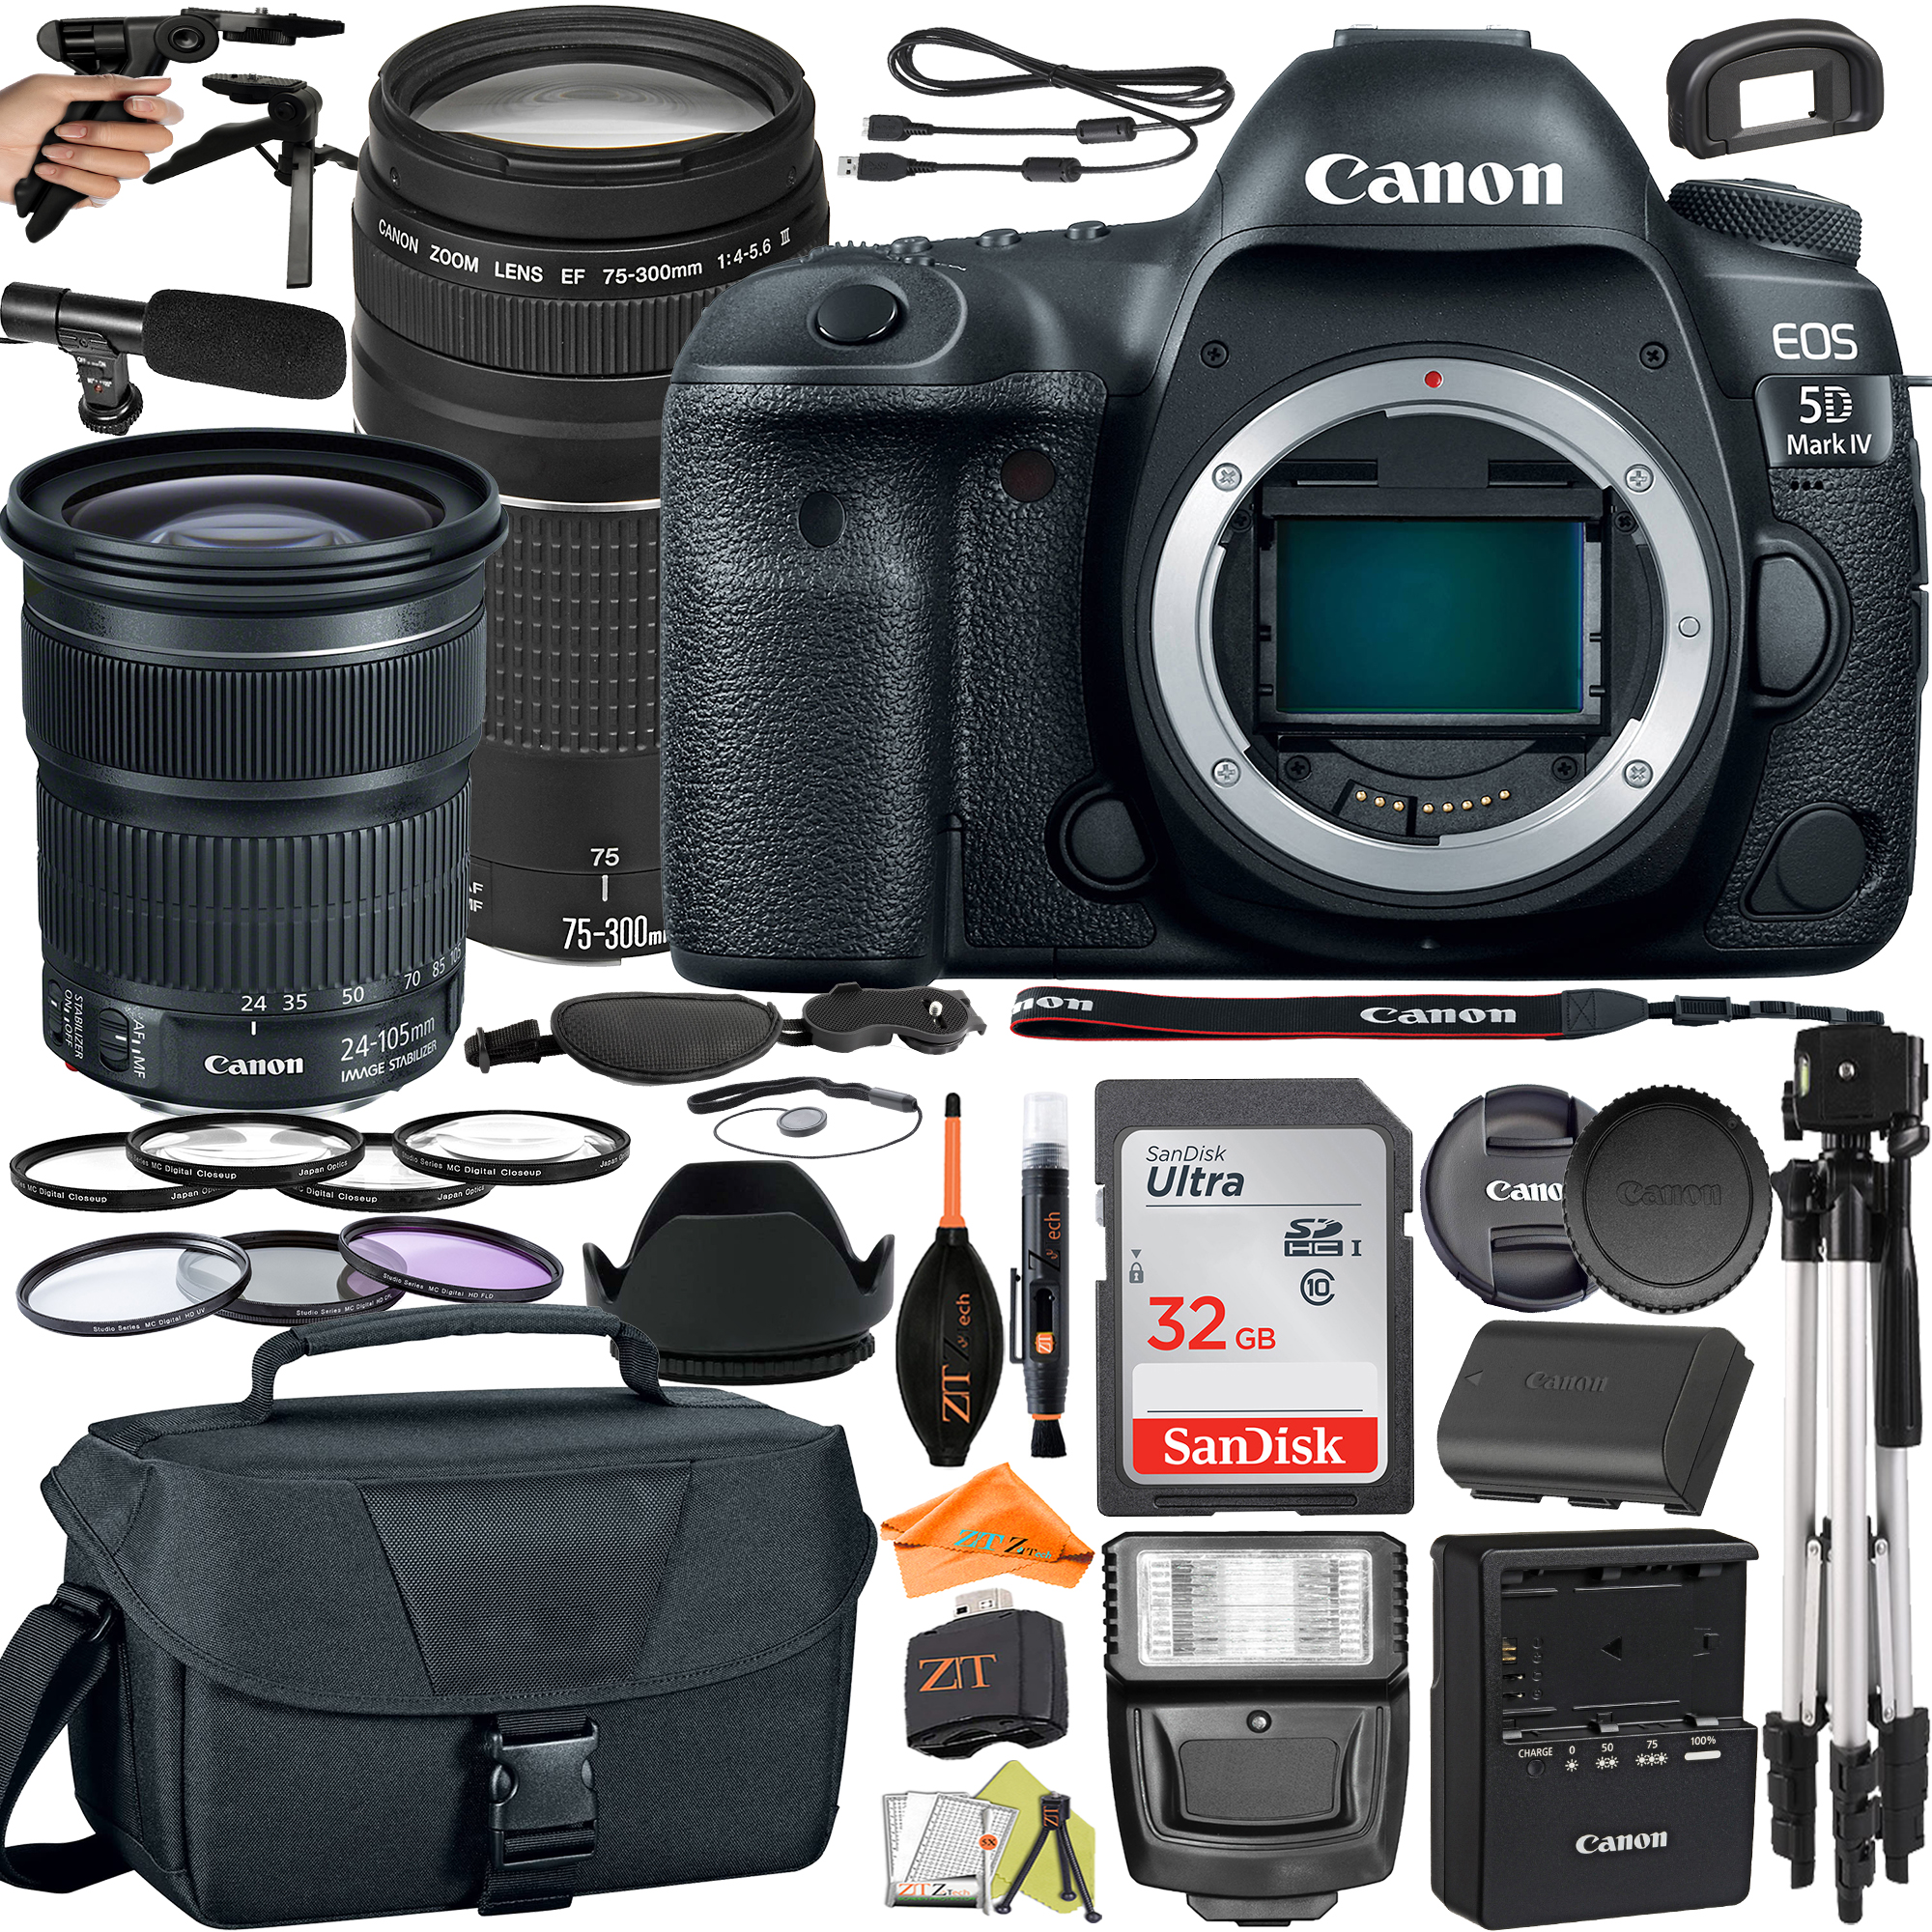 Canon EOS 5D Mark IV DSLR Camera with 24-105mm + 75-300mm Lens + SanDisk 32GB + Microphone + Flash + ZeeTech Accessory Bundle